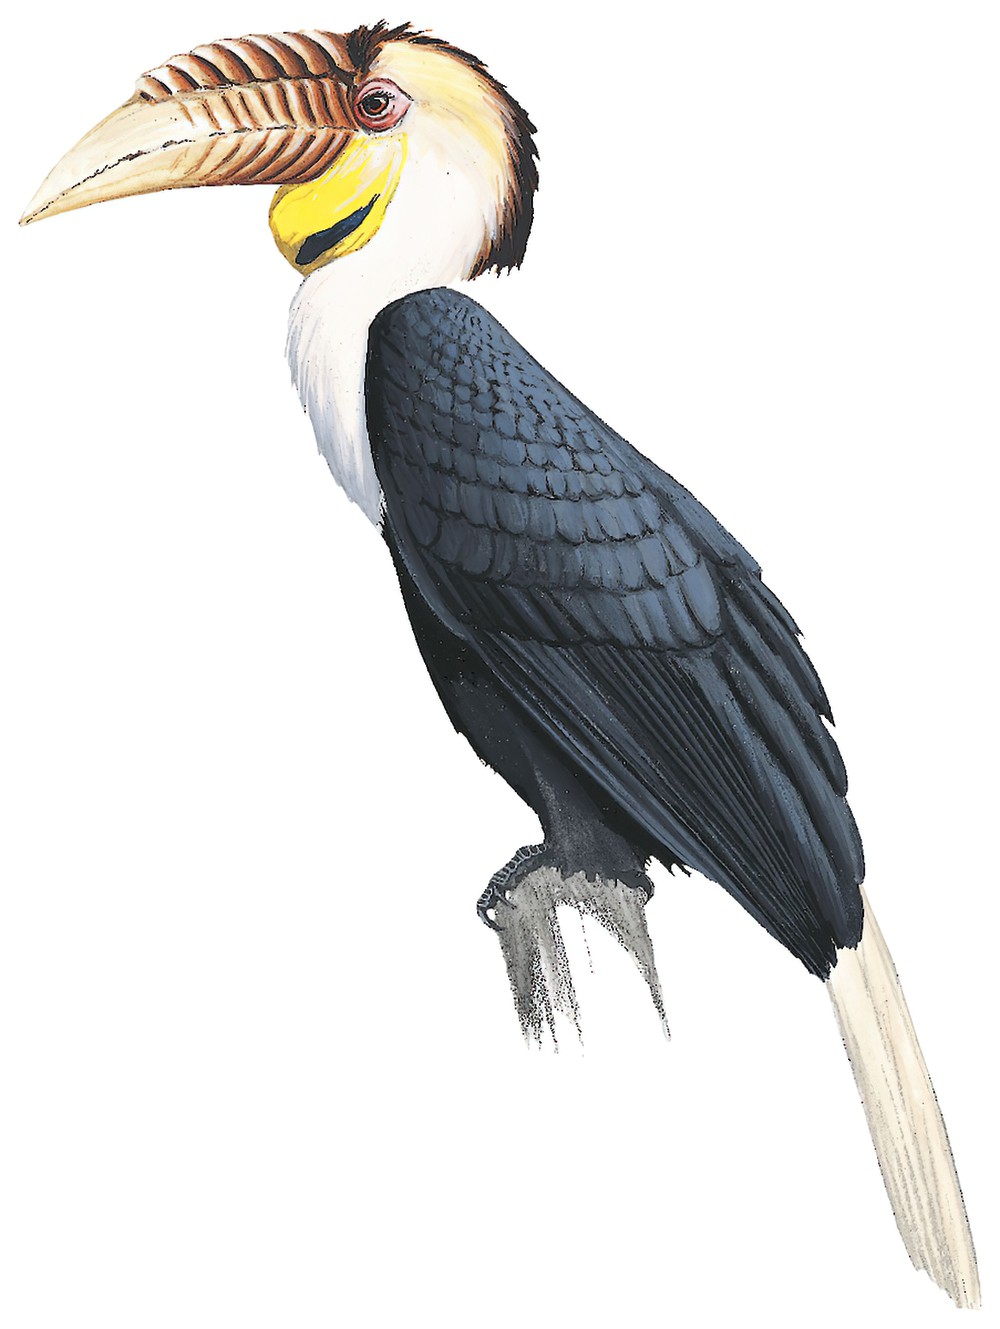 Wreathed Hornbill / Rhyticeros undulatus